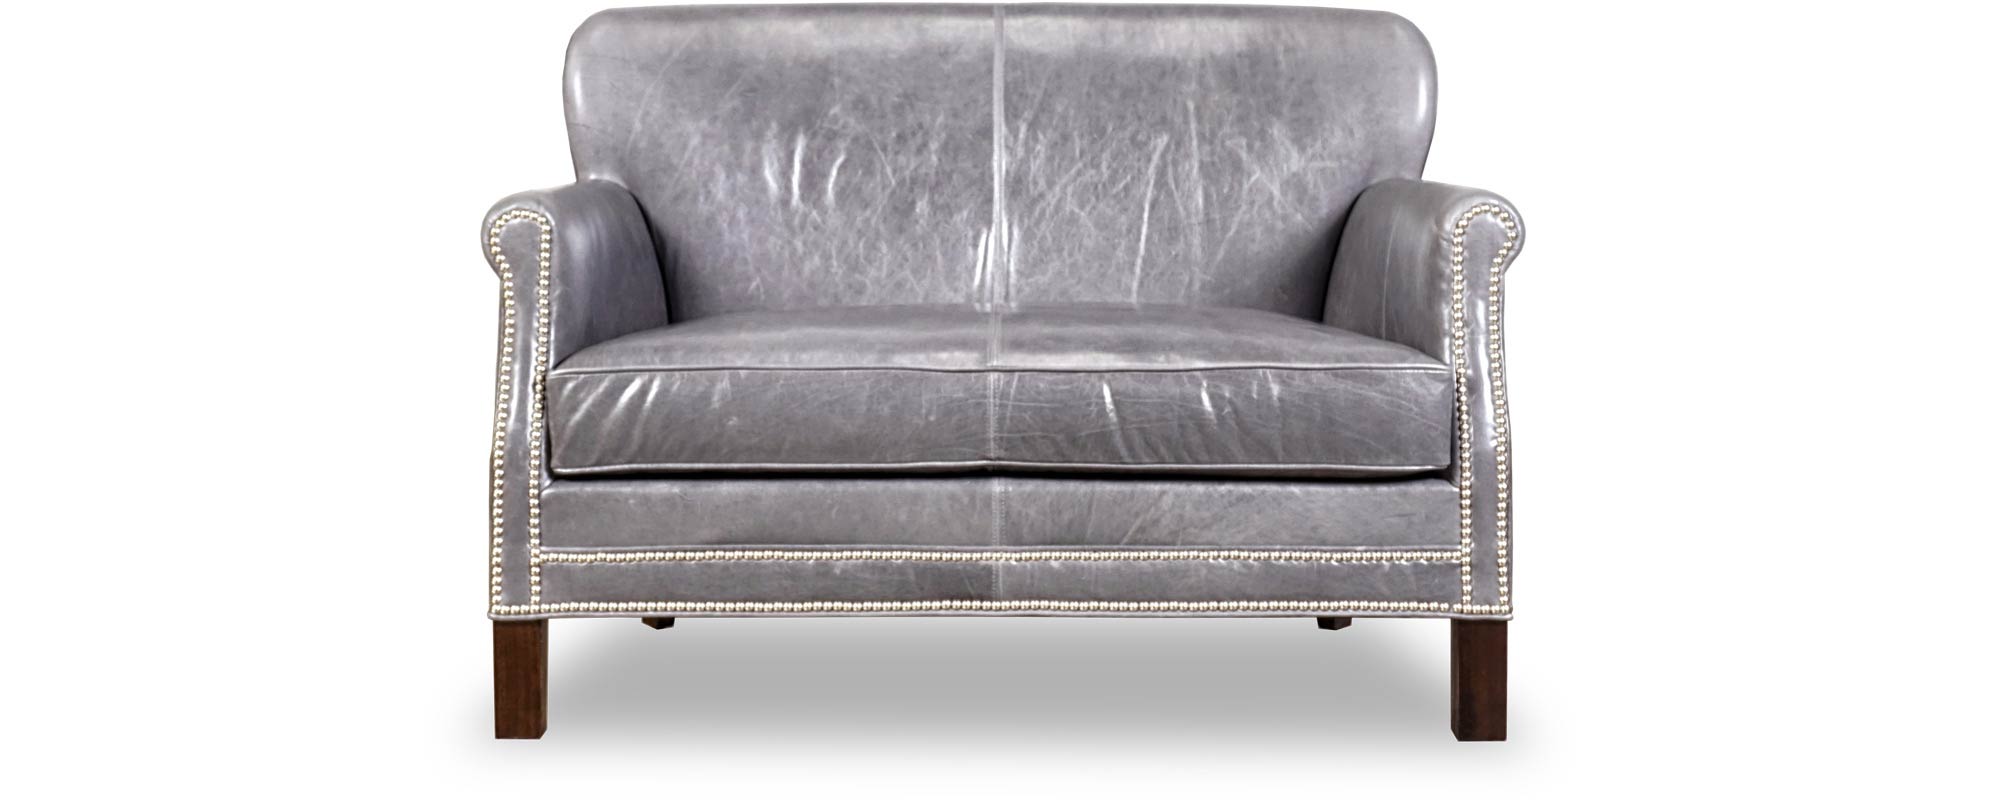 54 Jenkins mini sofa in Mont Blanc Iron leather